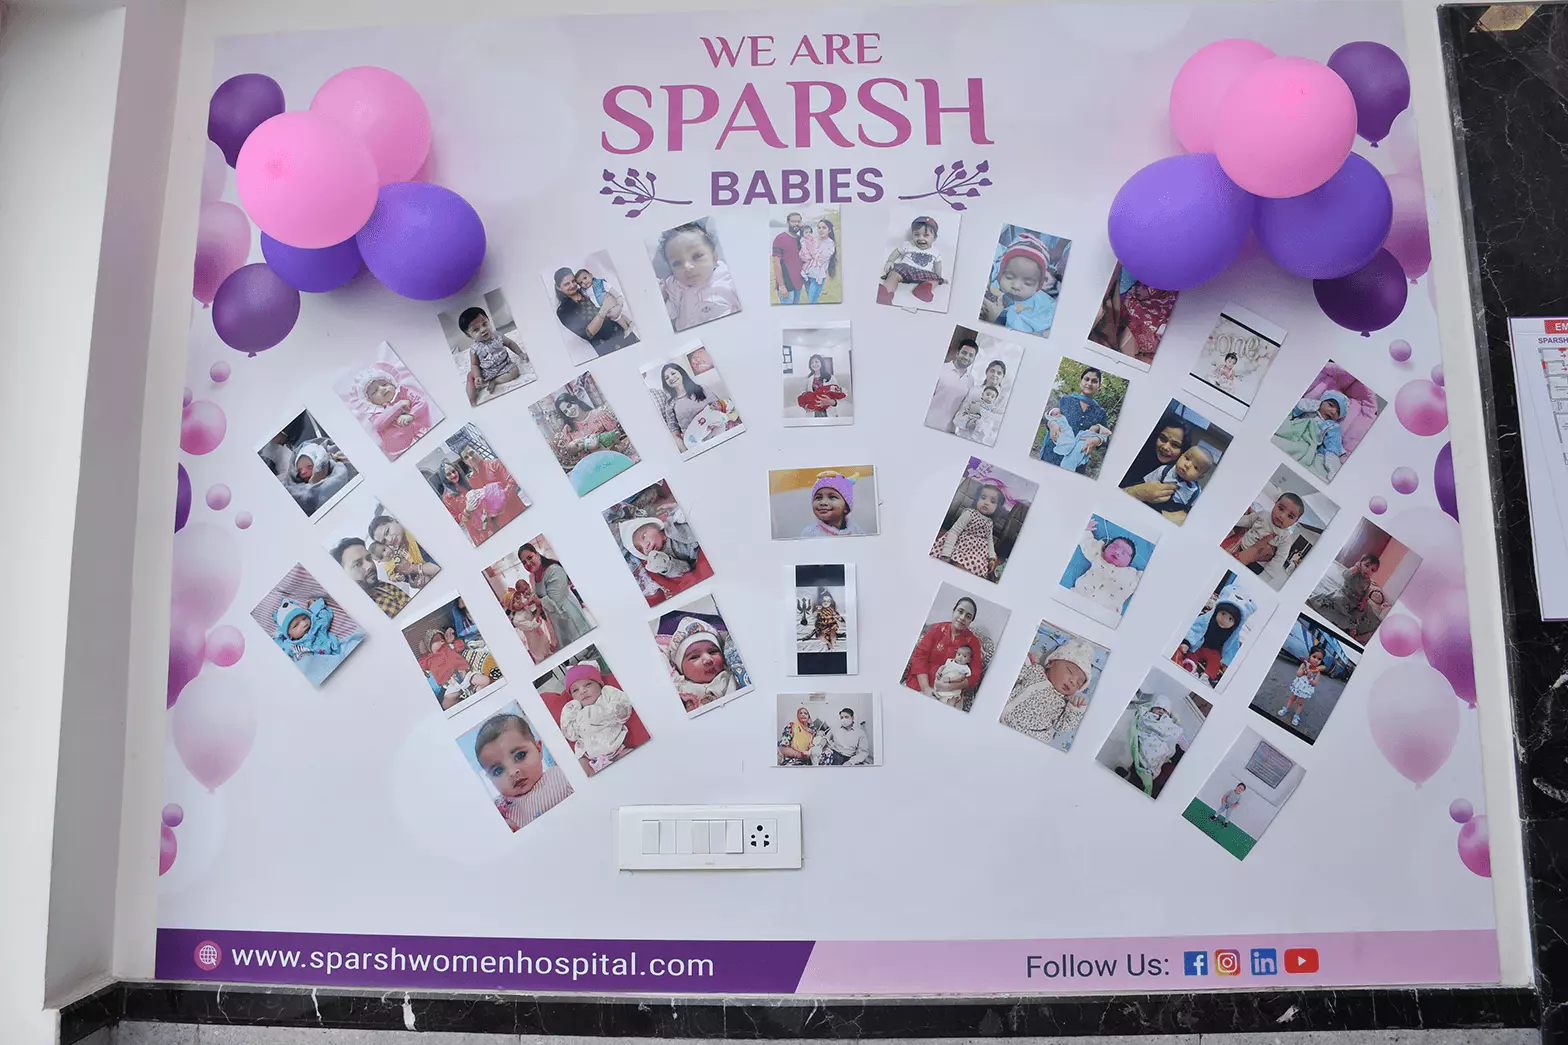 Sparsh ivf babies 3rd anniversary